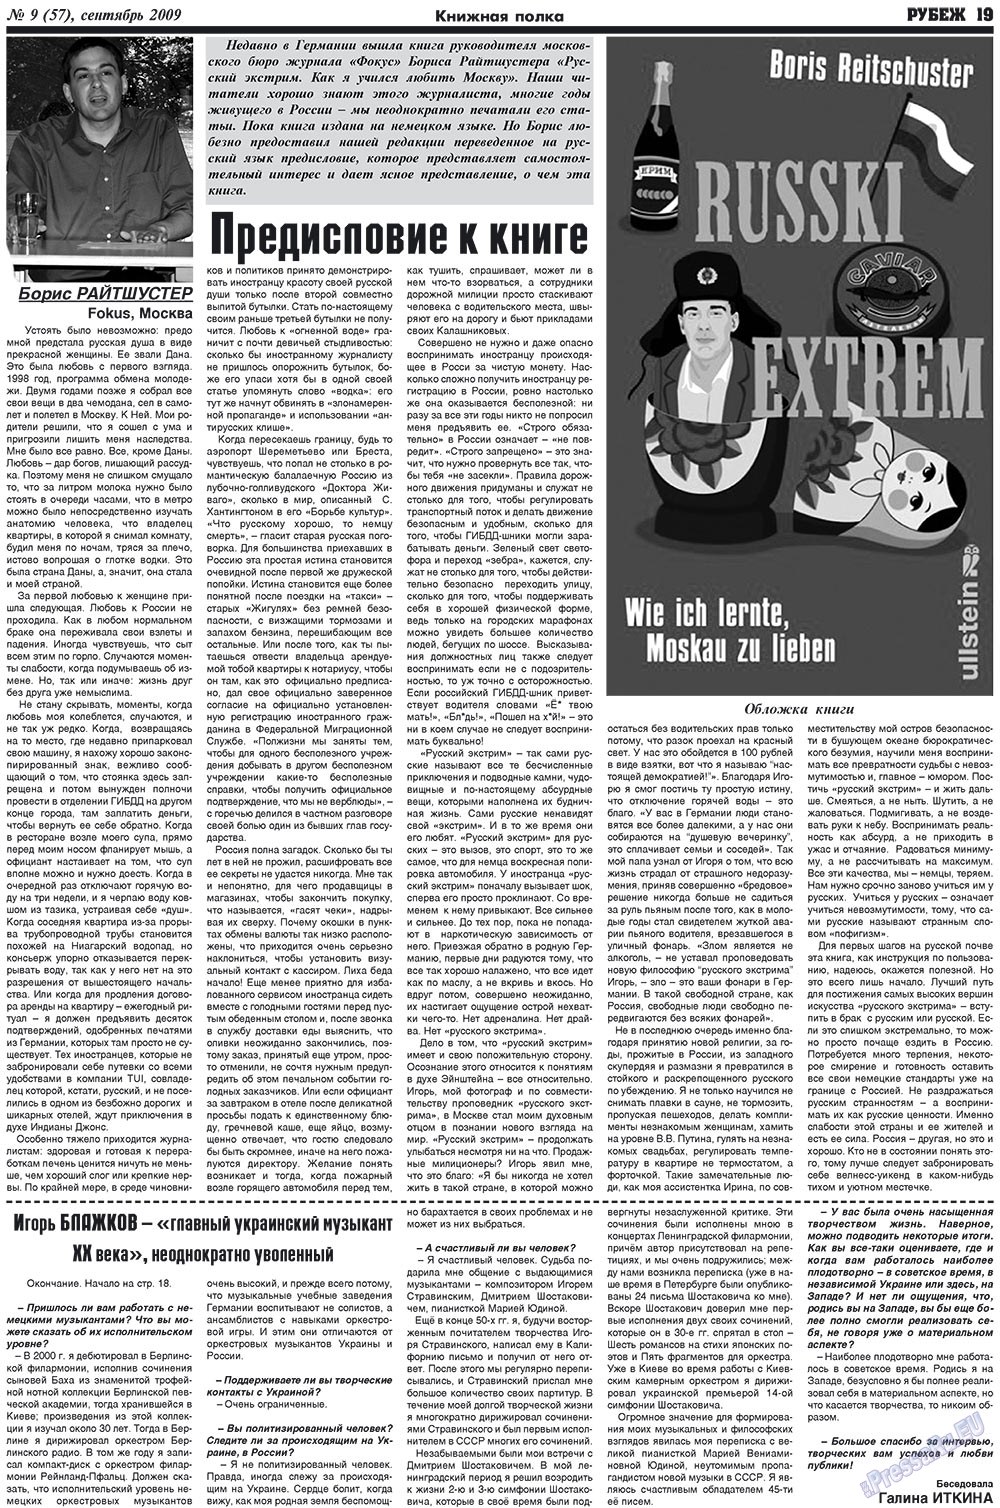 Рубеж, газета. 2009 №9 стр.19